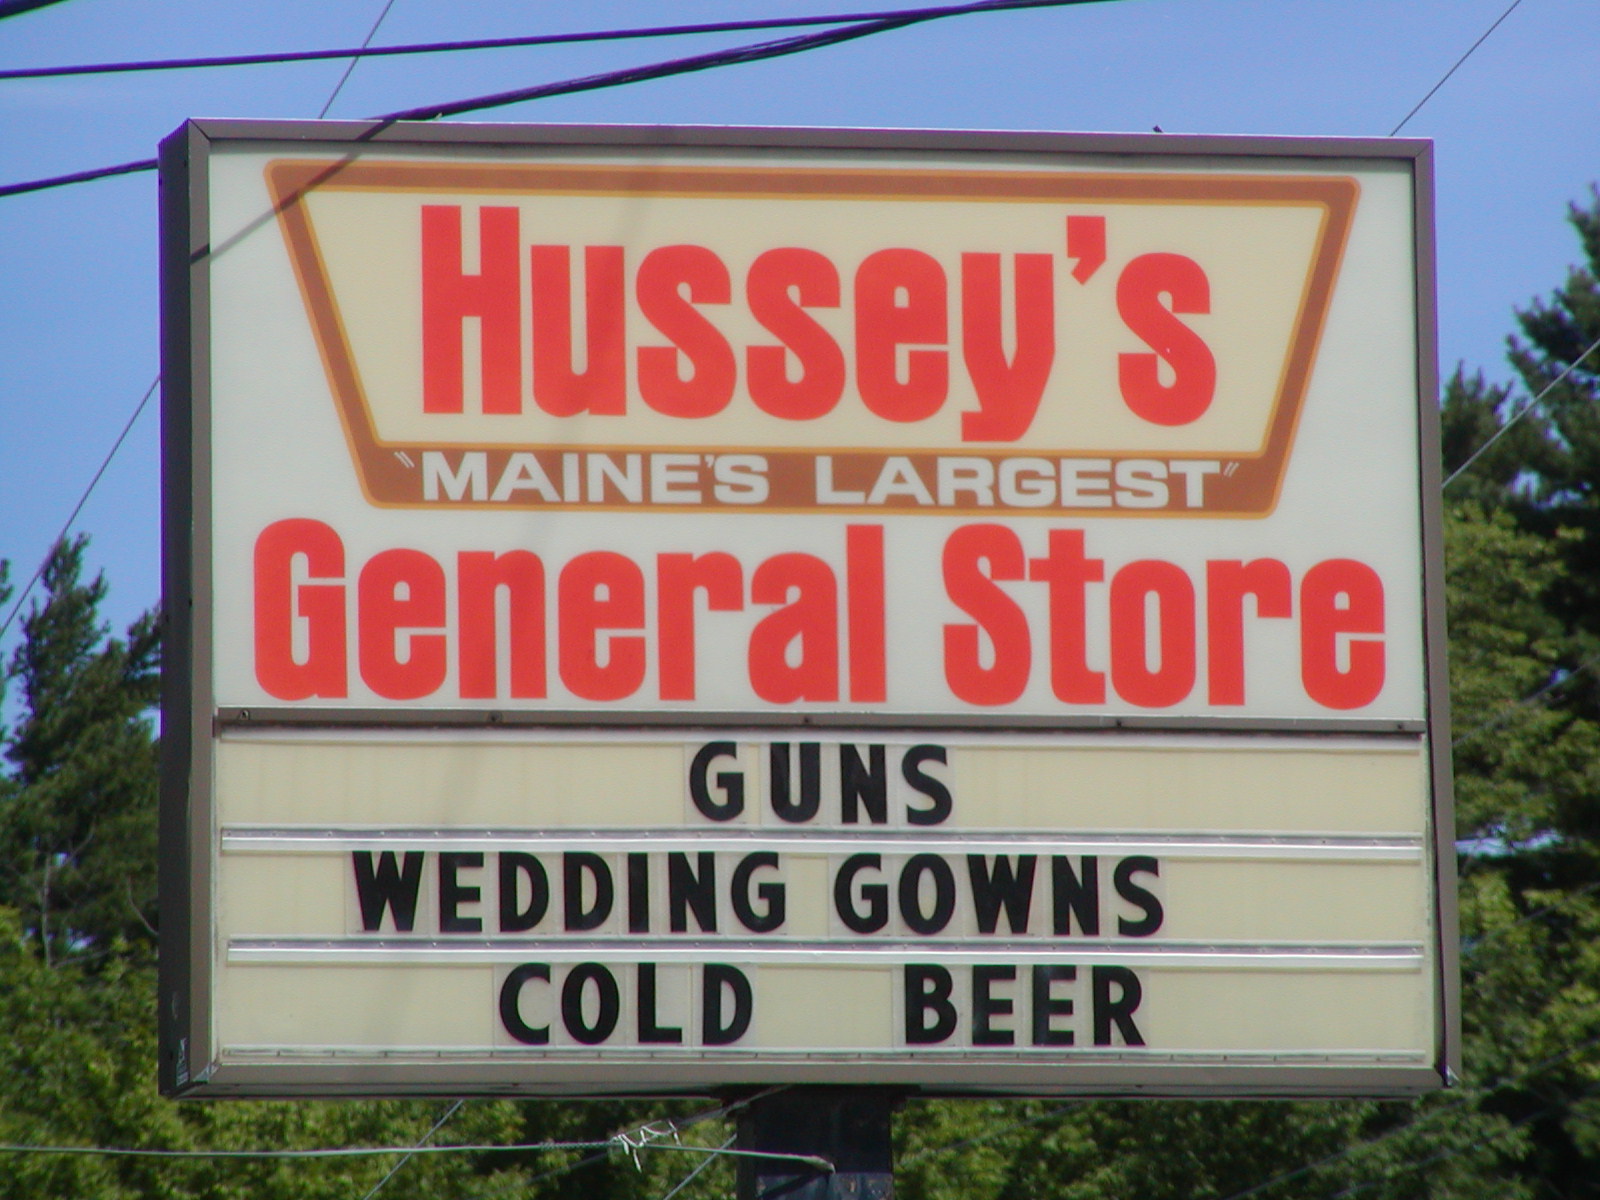 husseys-store-sign.jpg